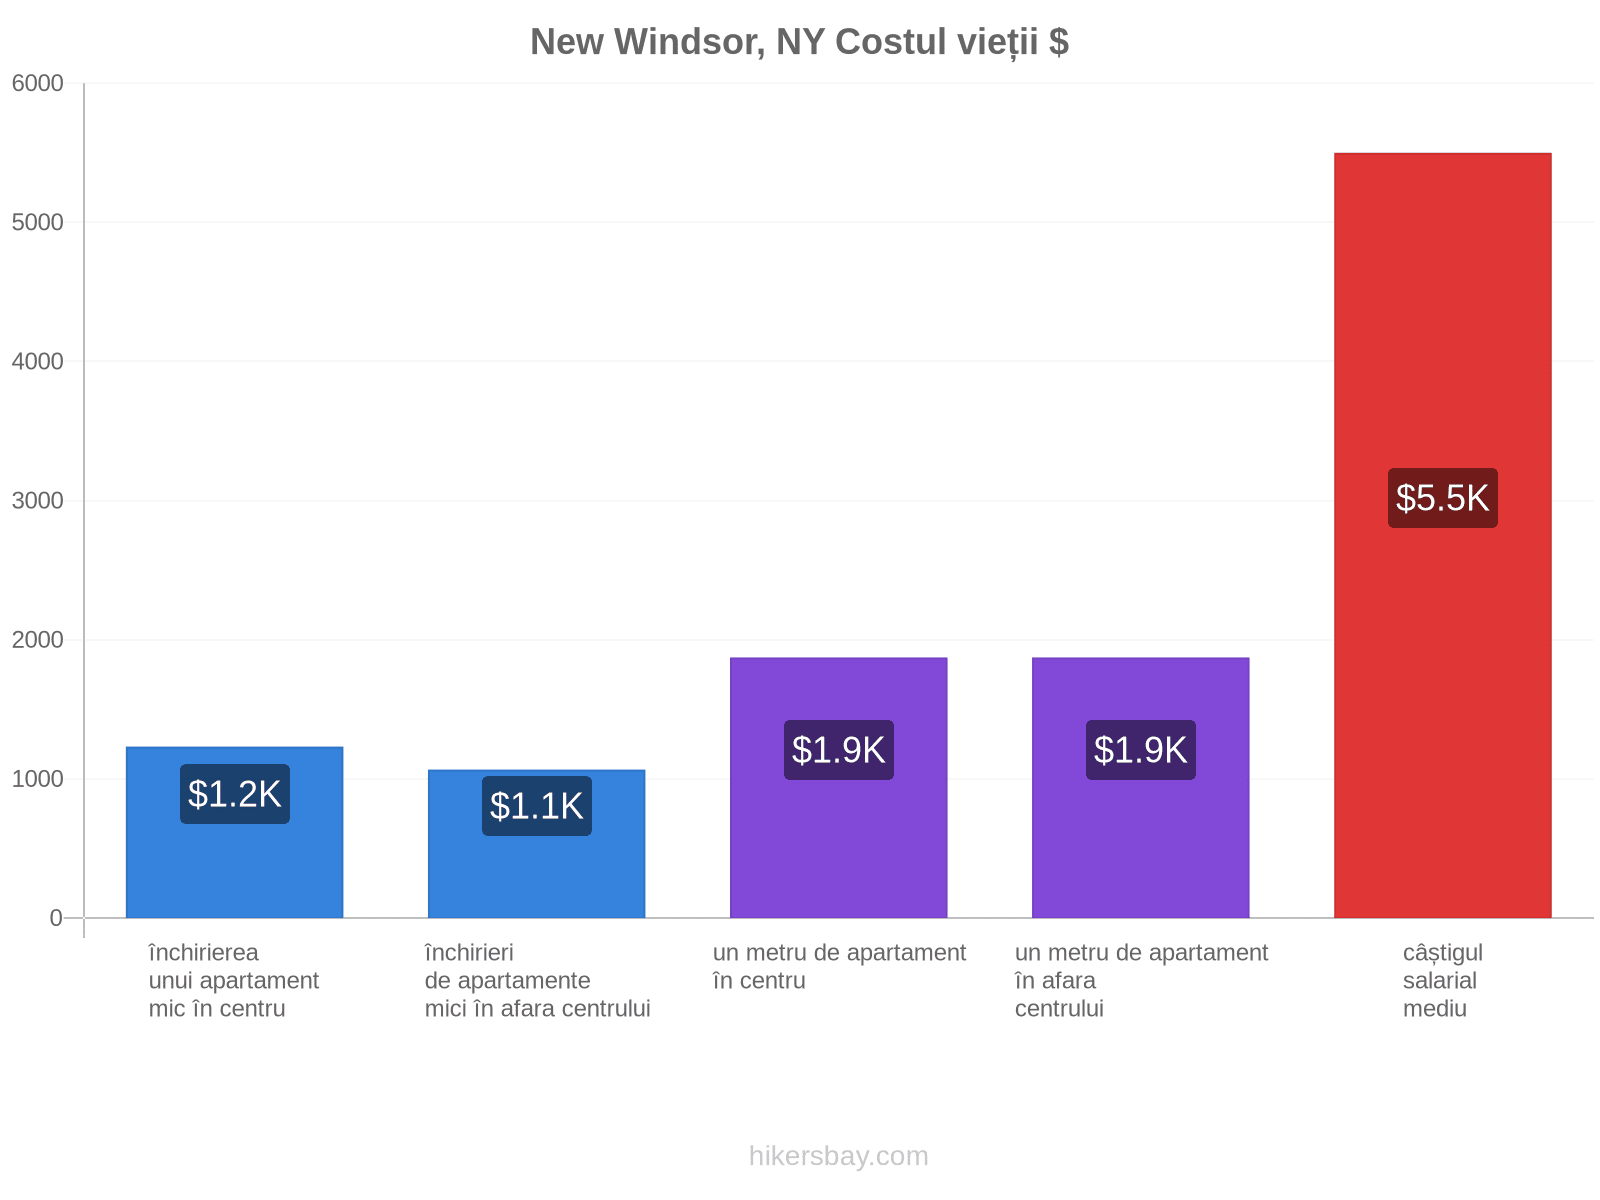 New Windsor, NY costul vieții hikersbay.com